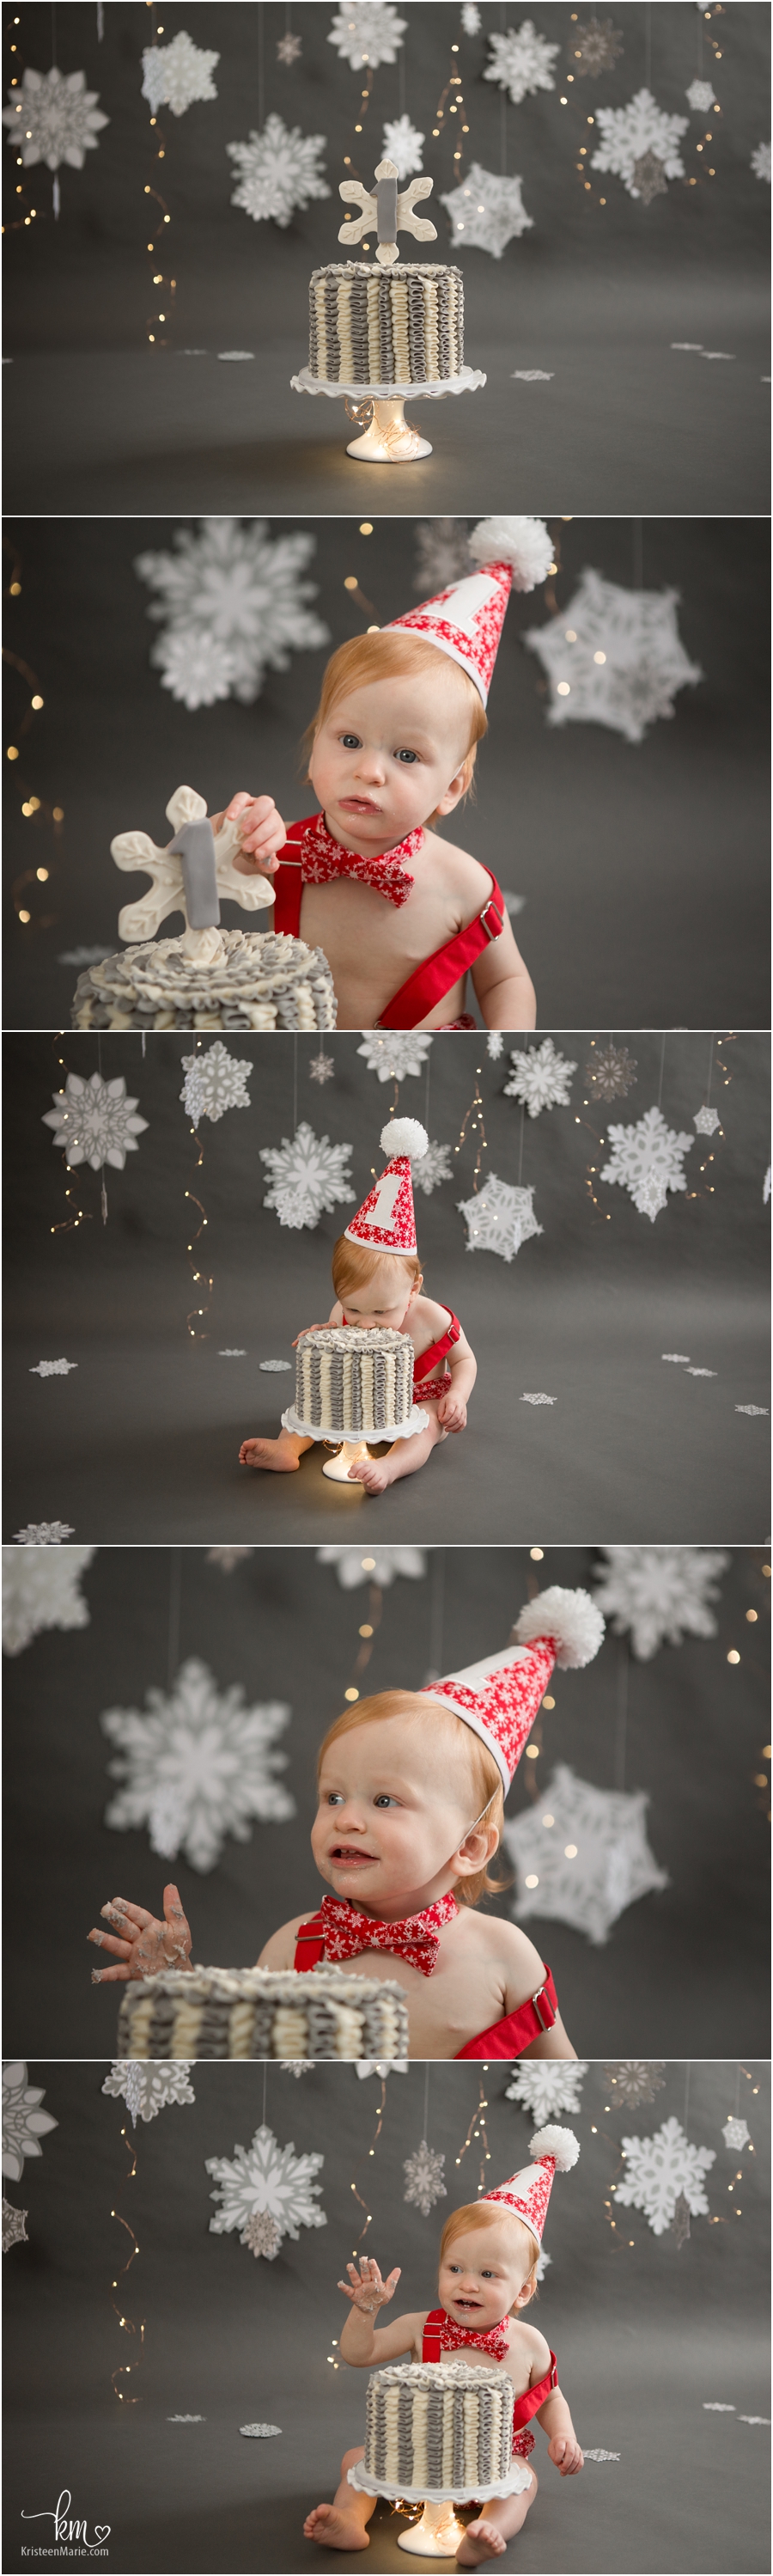 snowflake themed cake smash session with twinkle lights - witner ONEderland cake smash photography